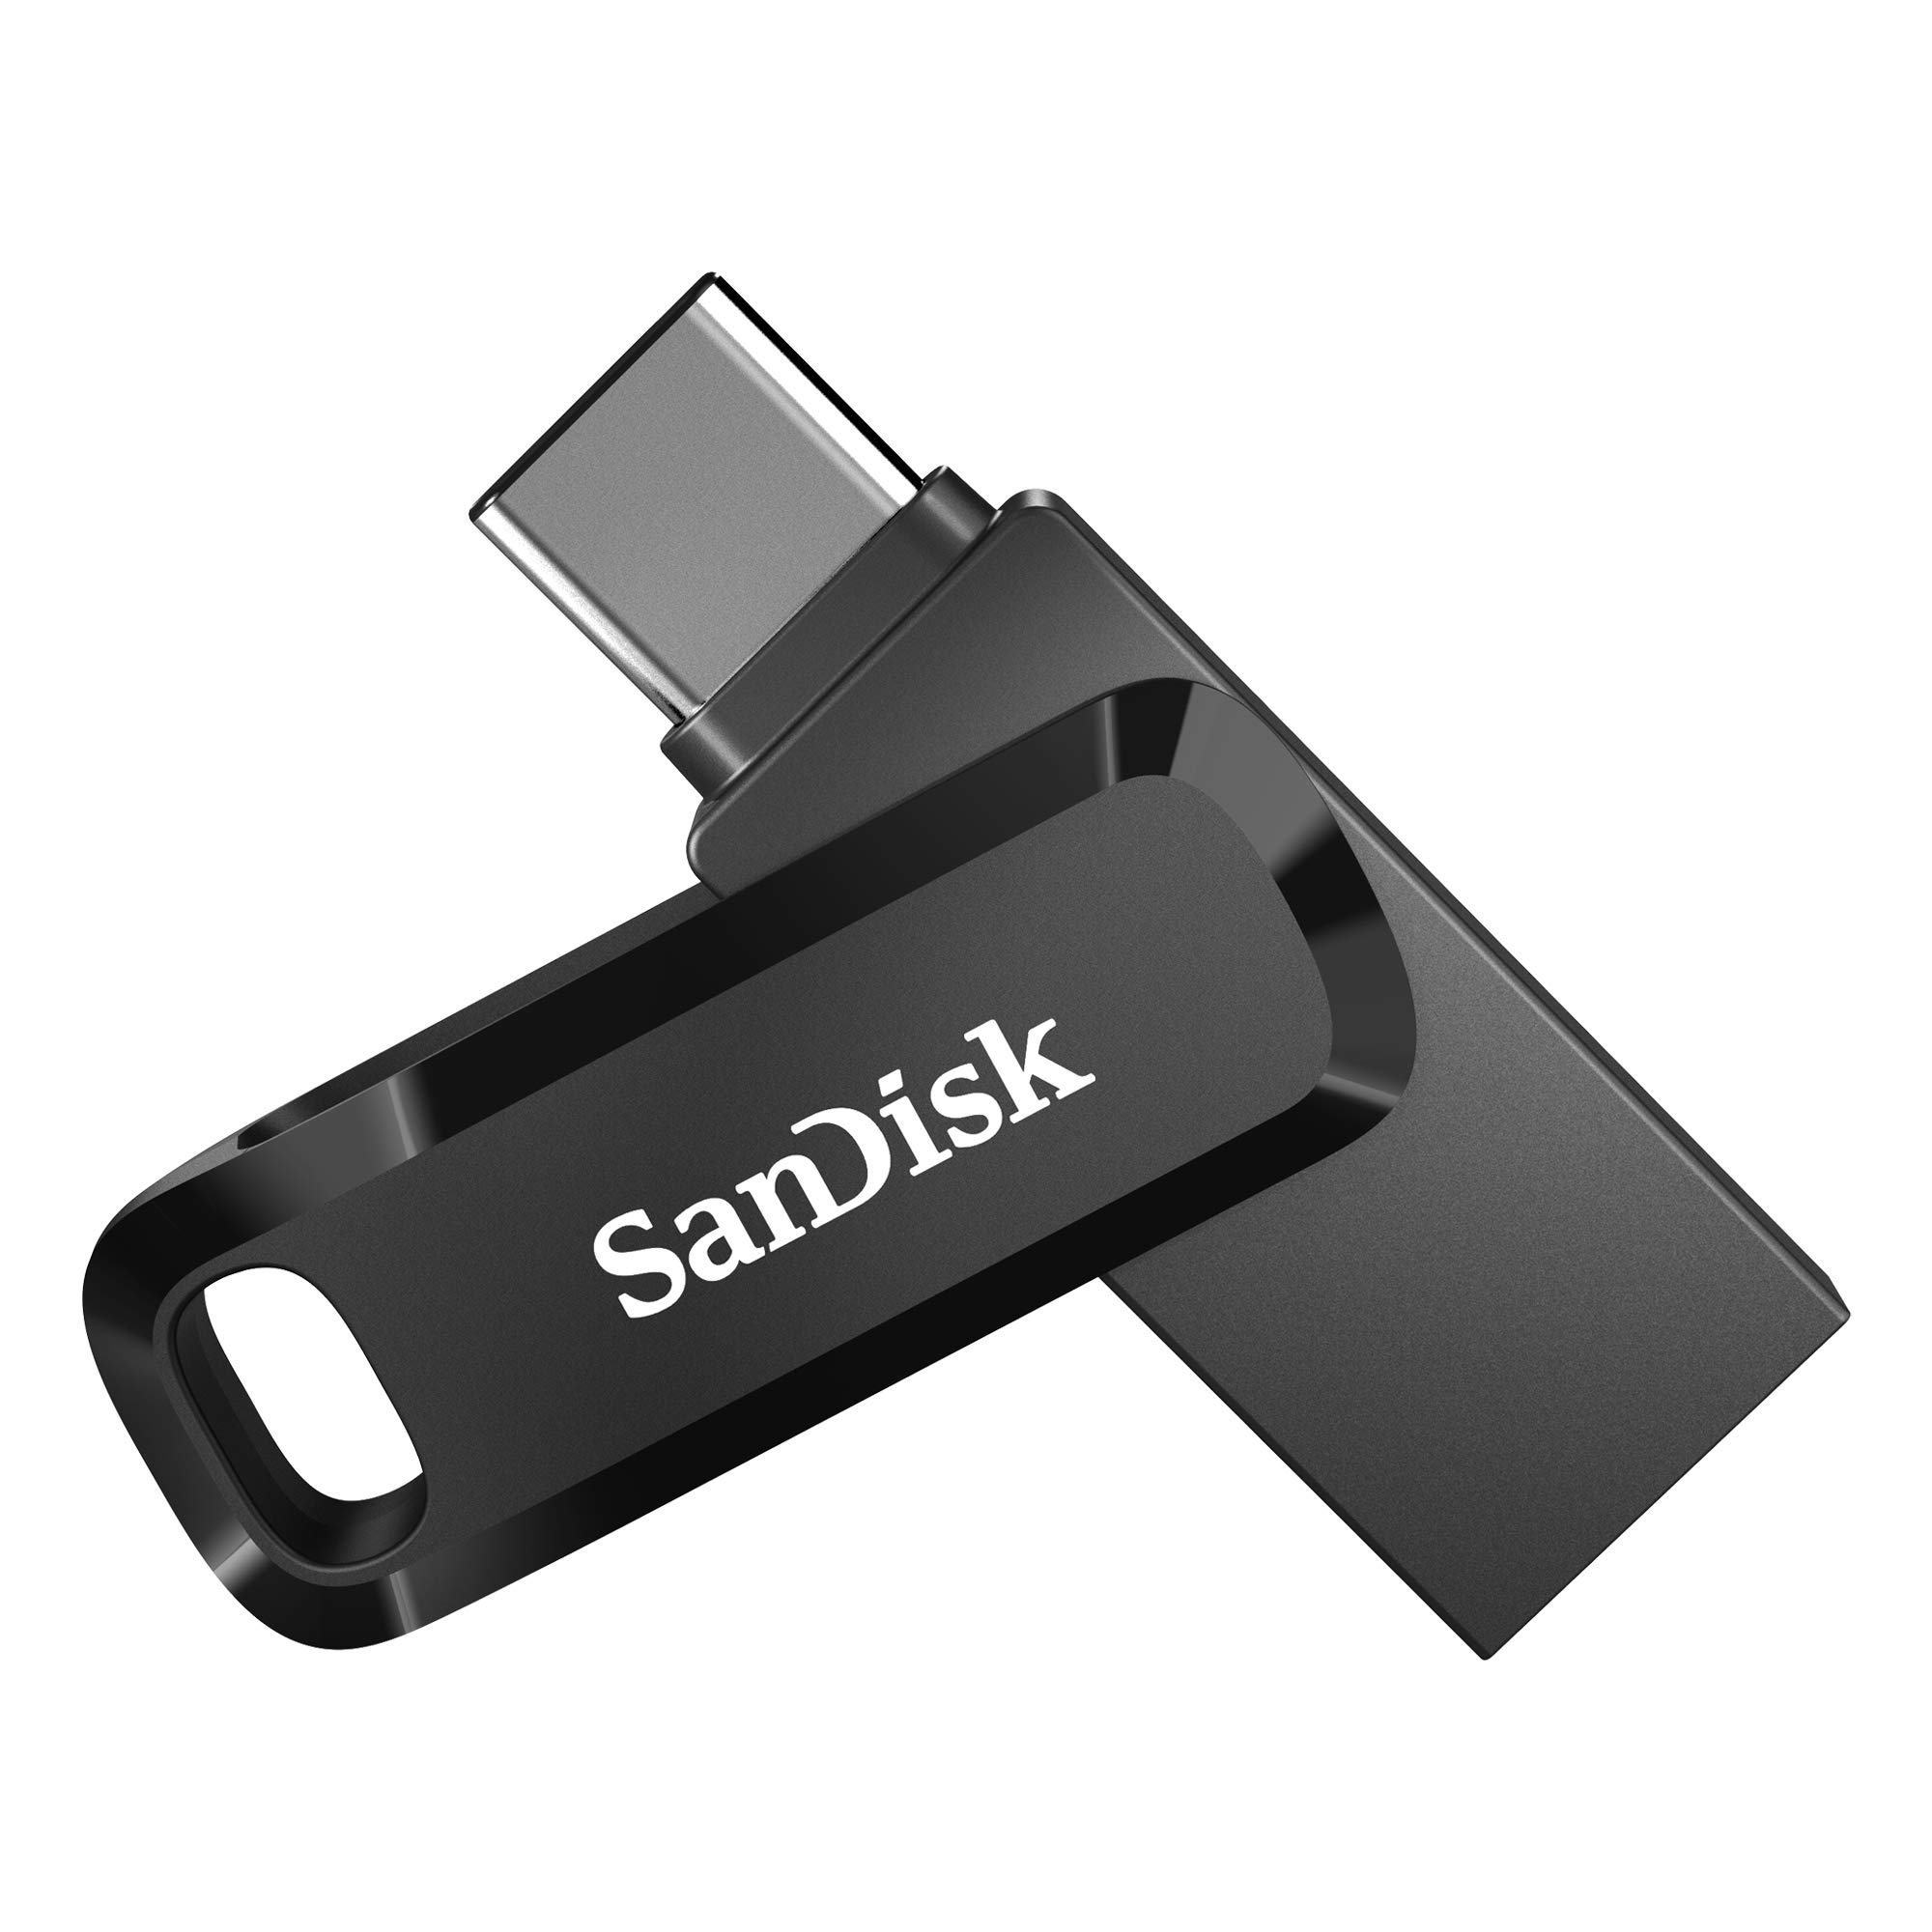 SanDisk 64GB Ultra Dual Drive Go USB Type-C Flash Drive, Black -SDDDC3-064G-GAM46